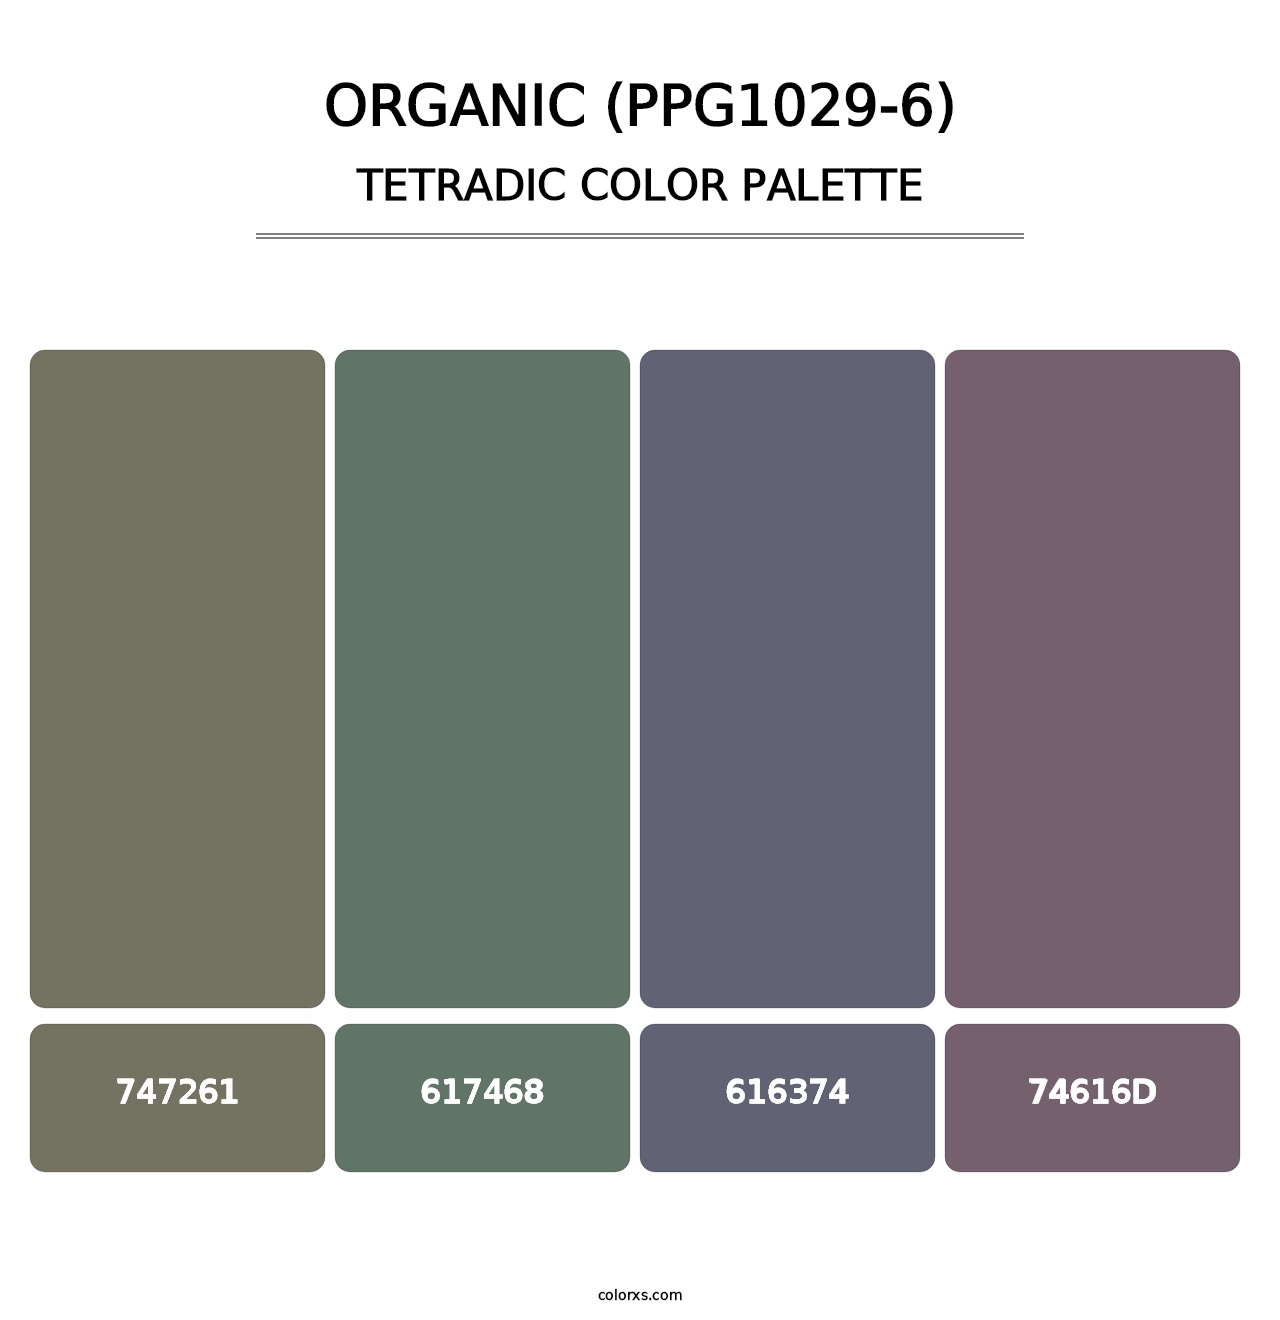 Organic (PPG1029-6) - Tetradic Color Palette